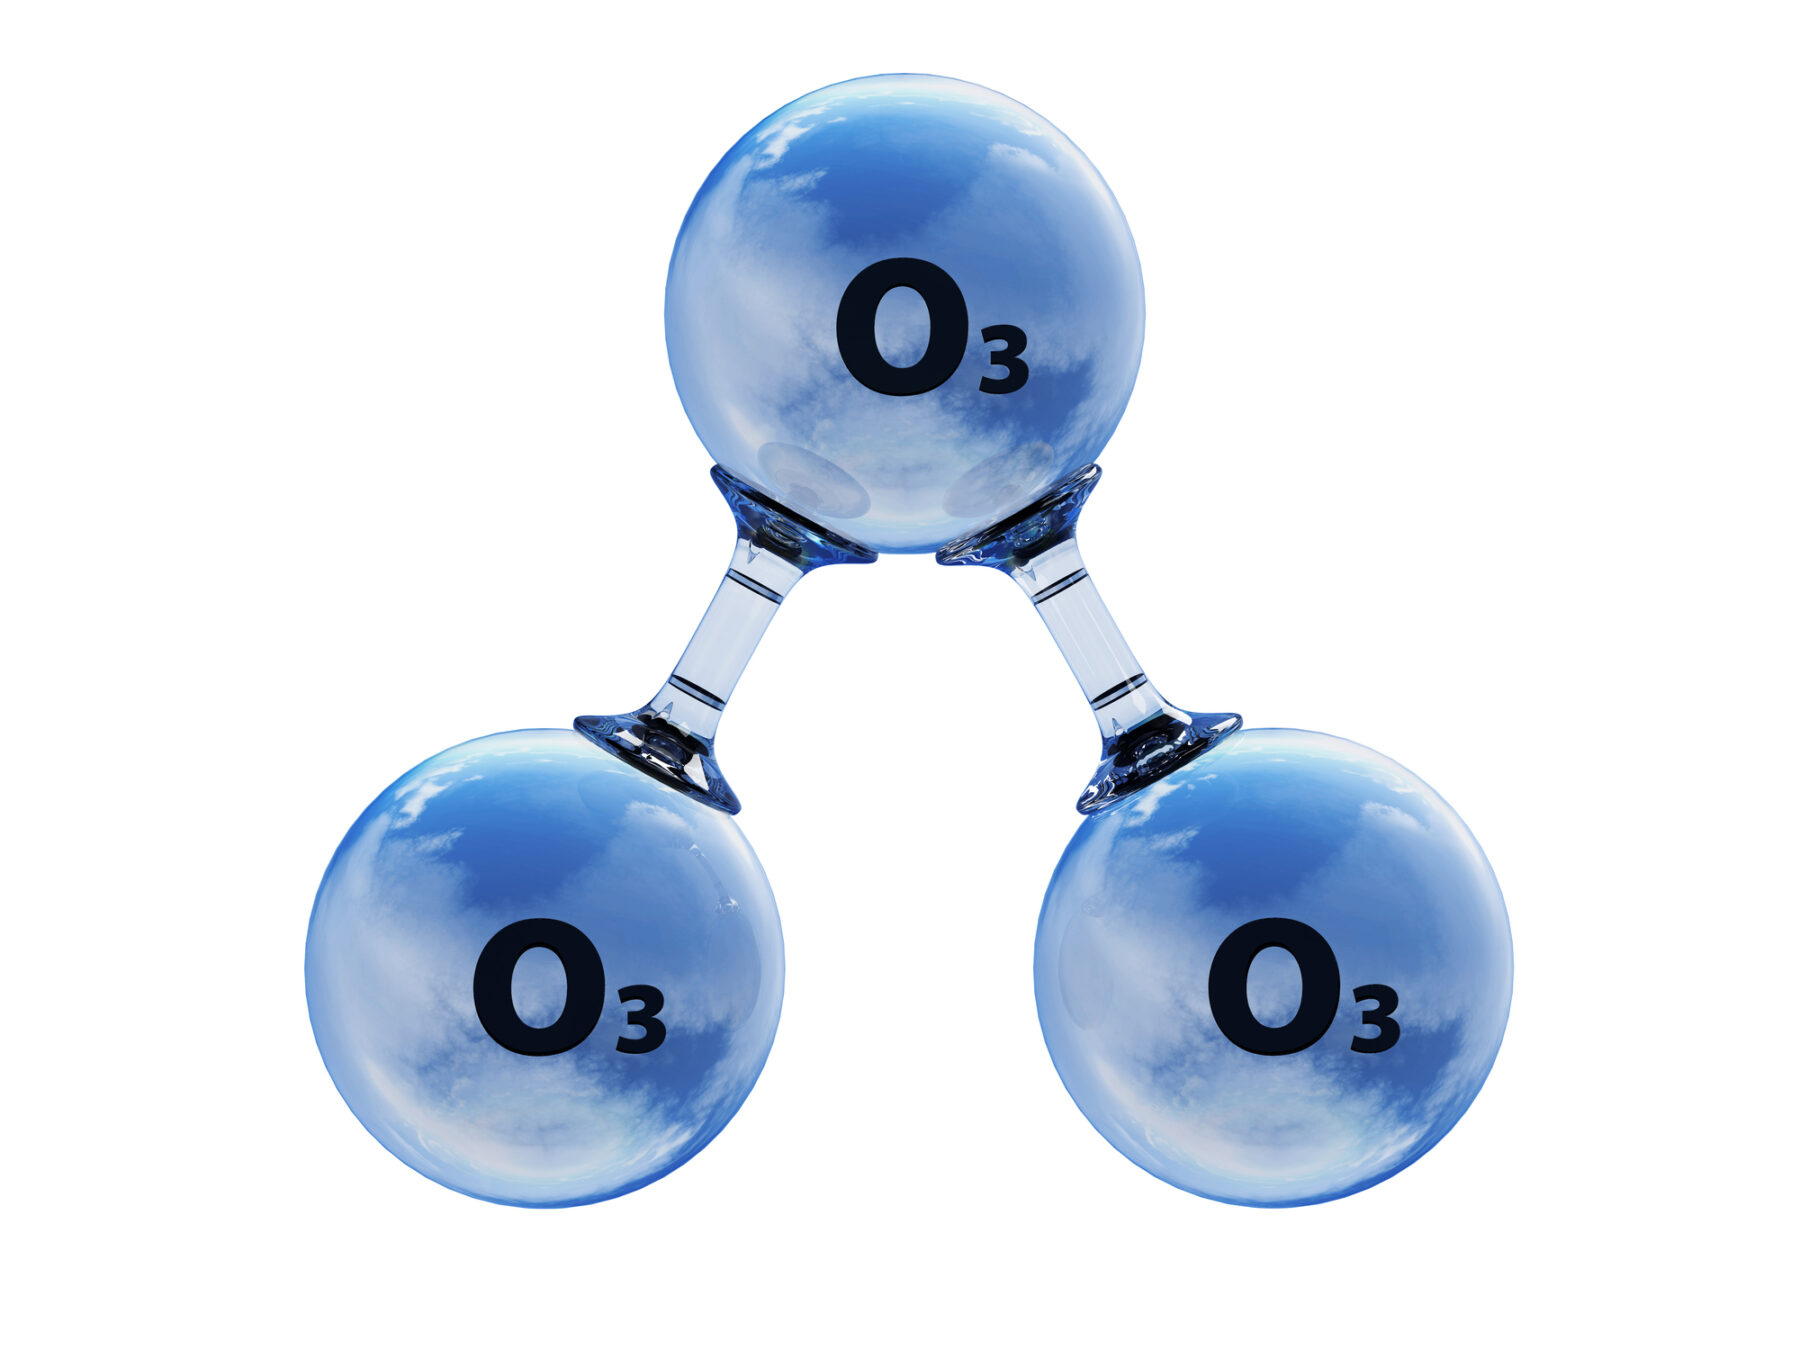 Major Autohemotherapy: Using Ozone for Health